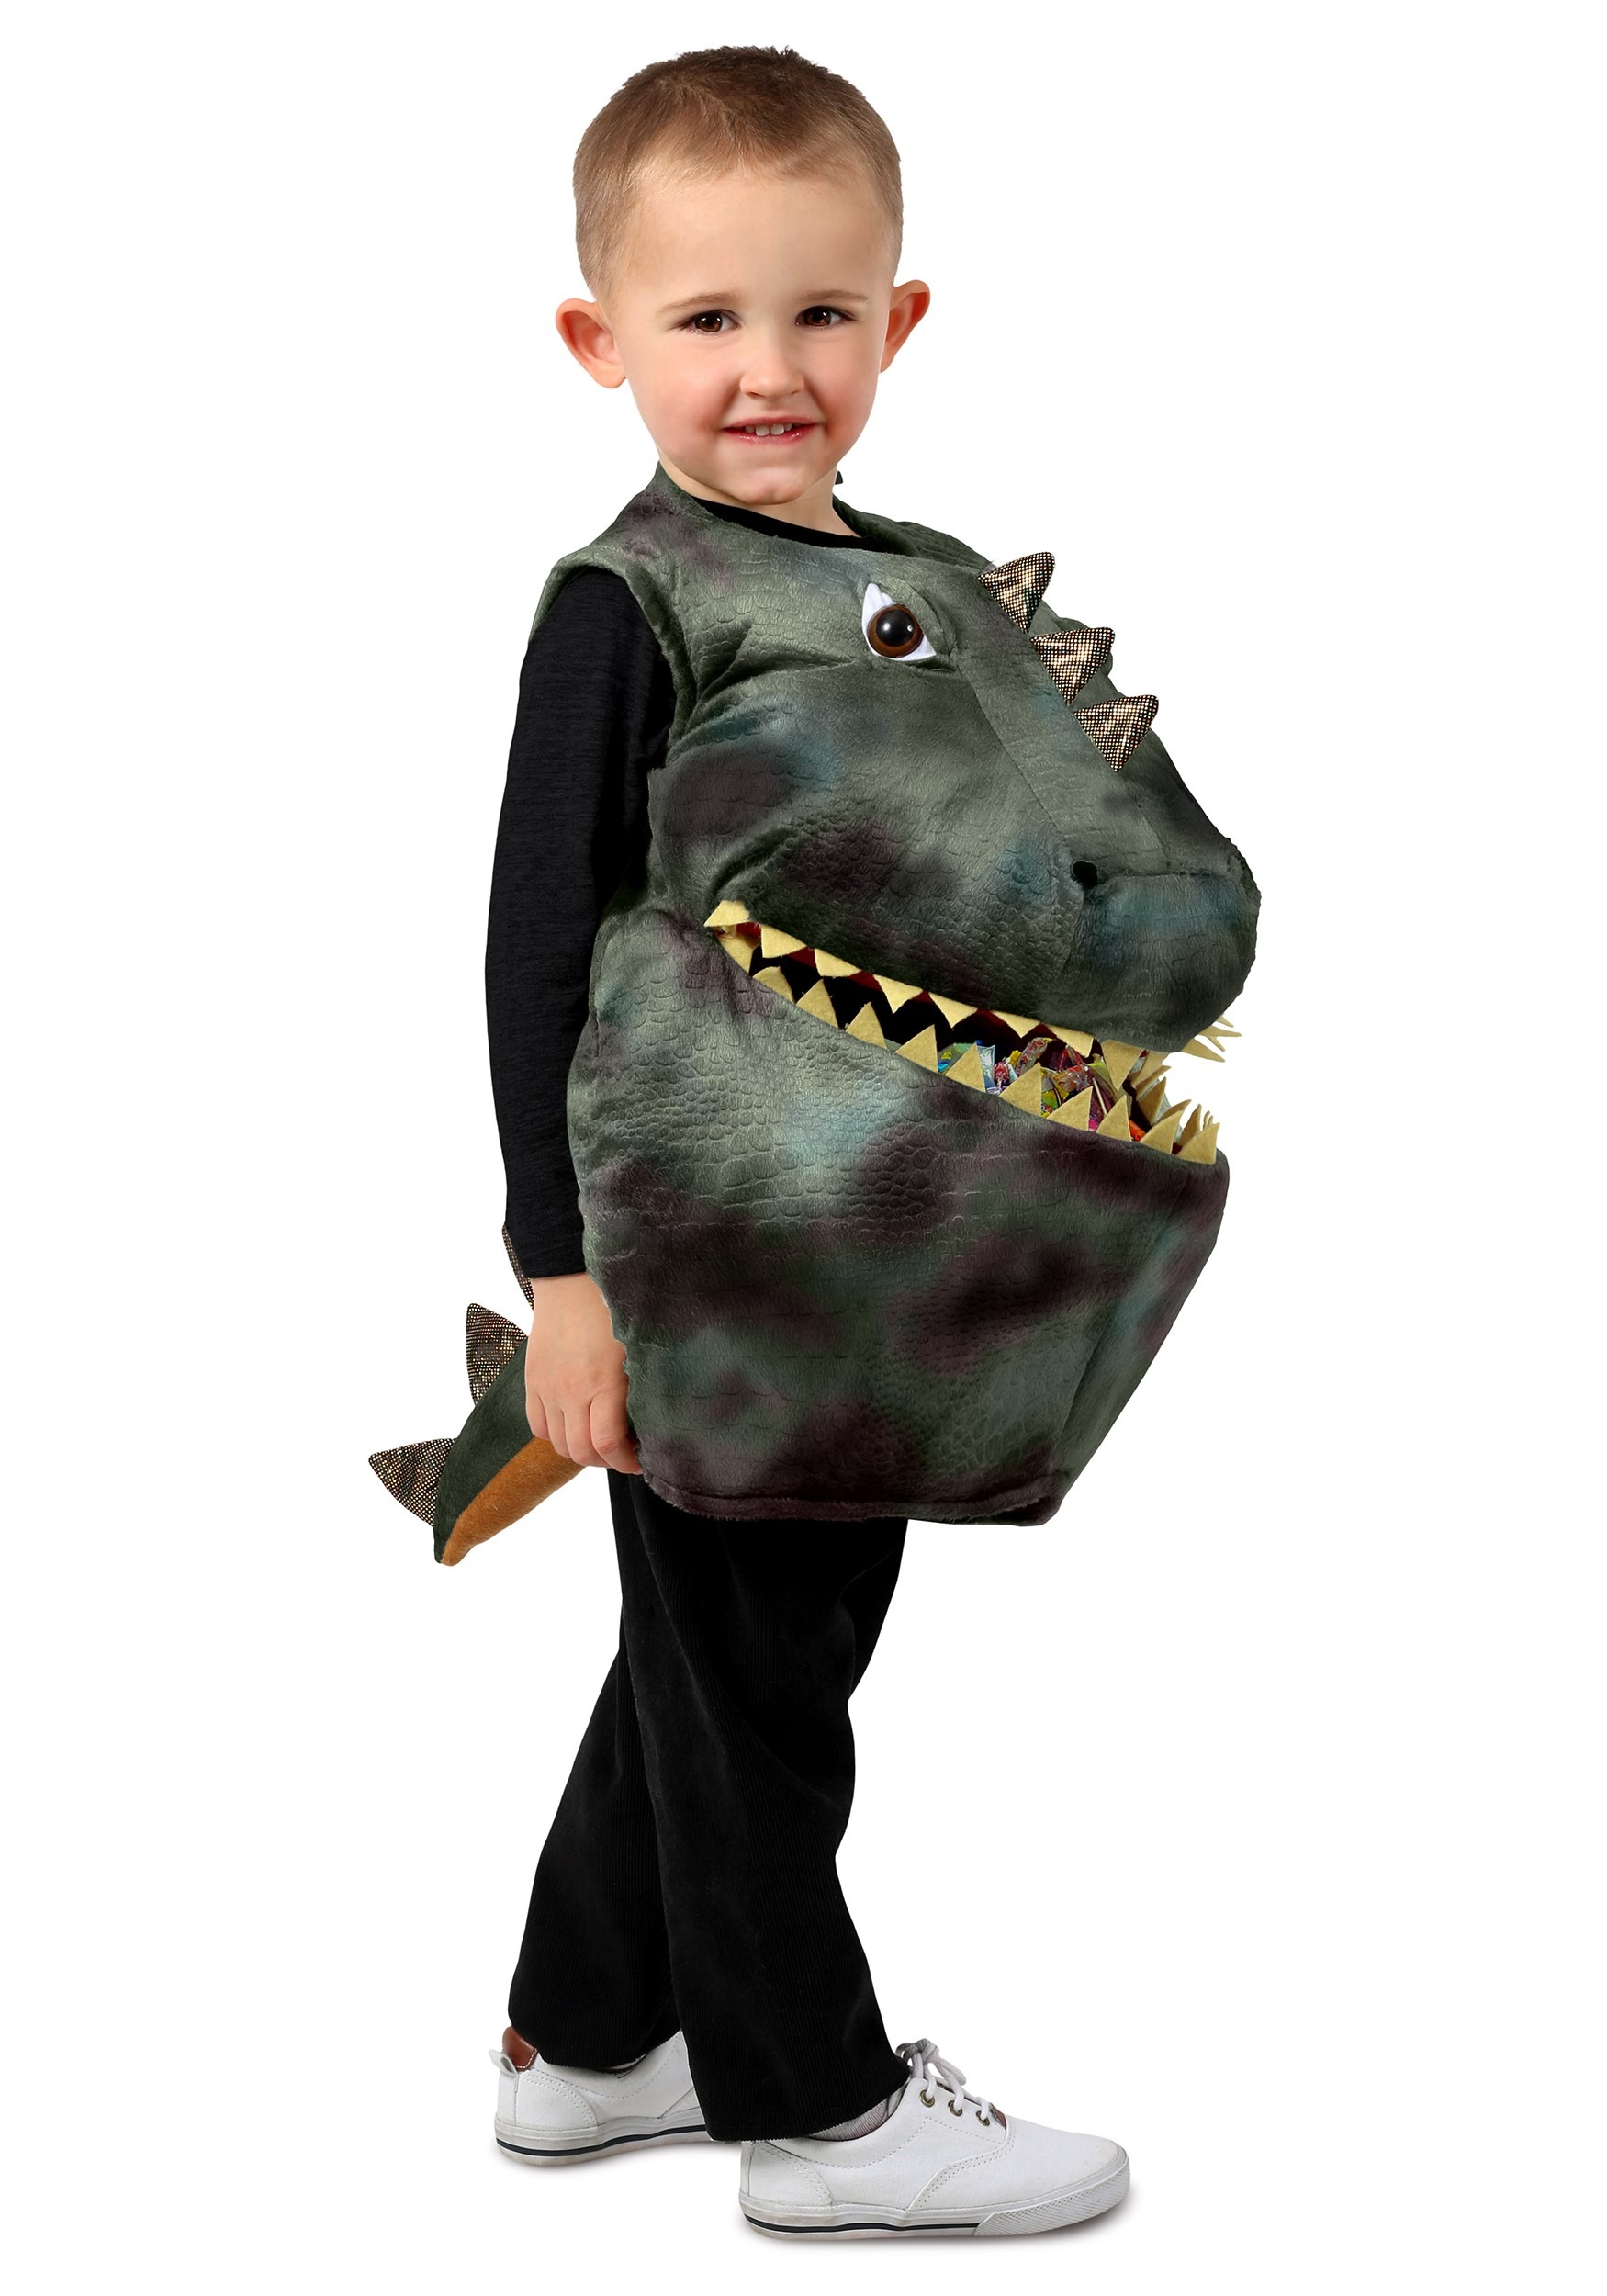 Photos - Fancy Dress Princess Paradise Feed Me Dinosaur Costume for Kids Green 